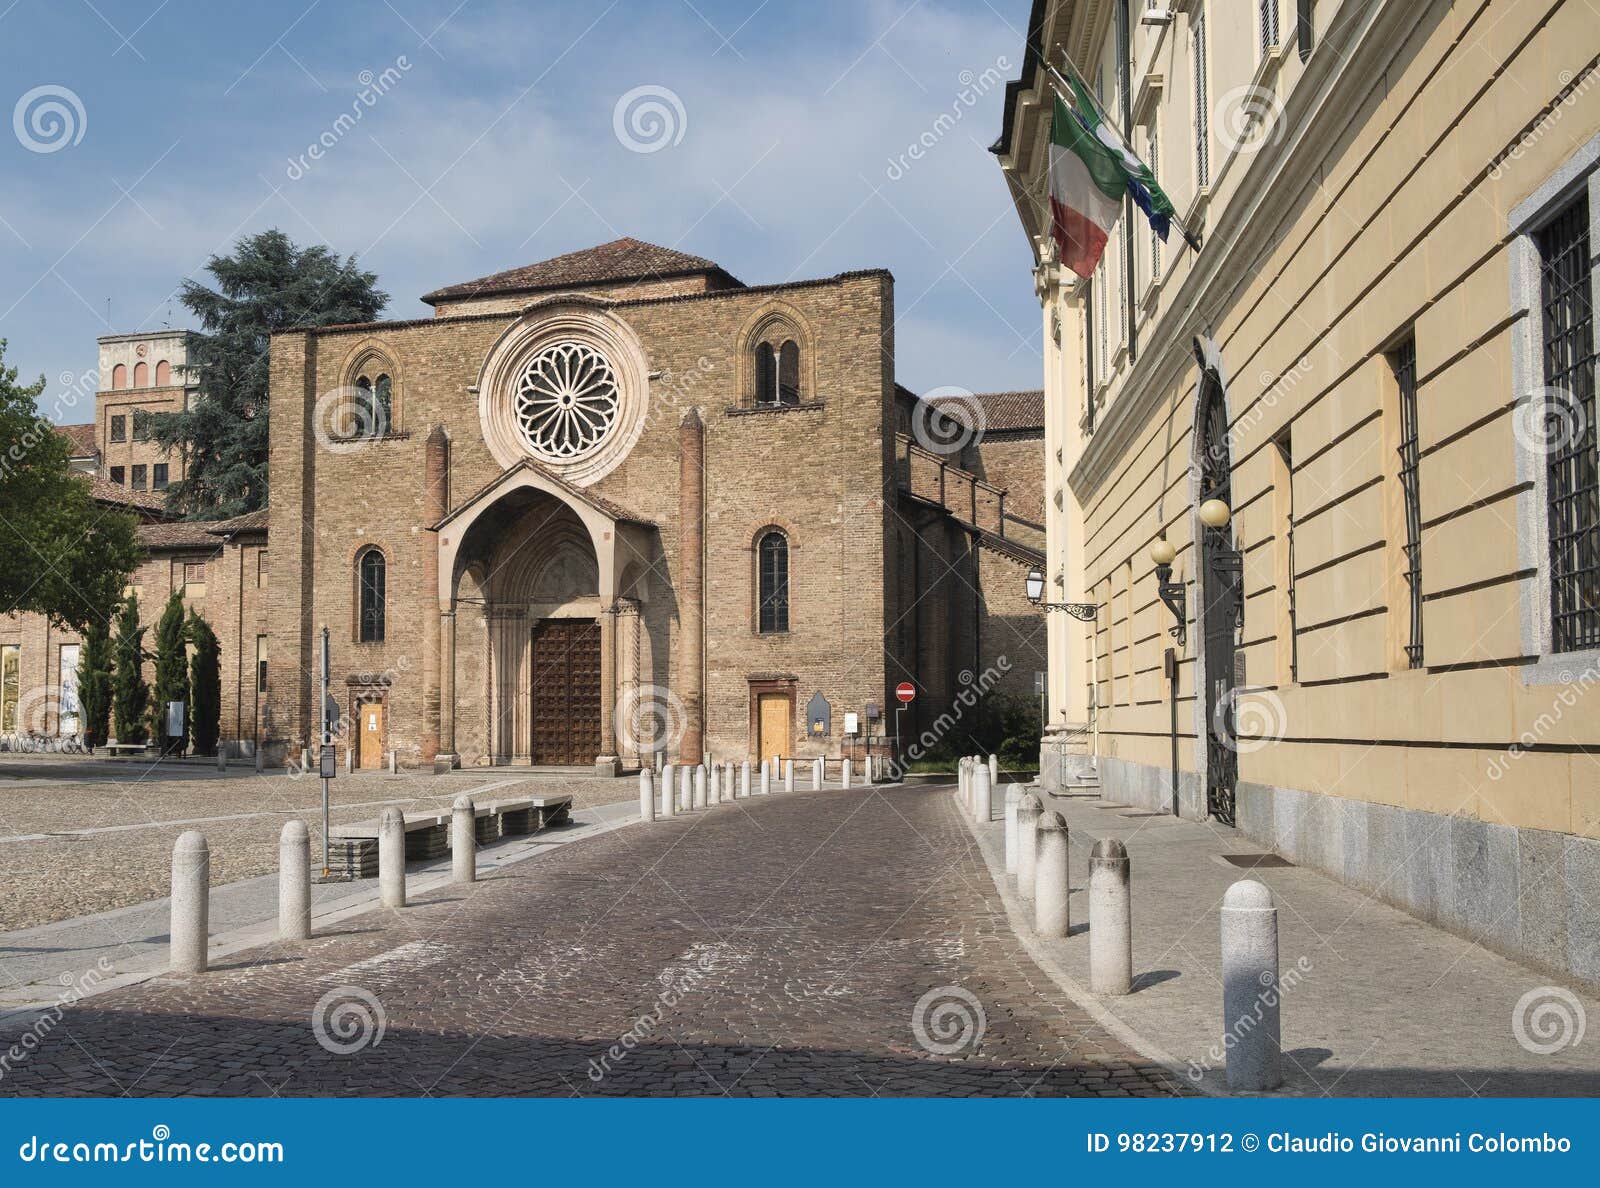 lodi italy: san francesco church